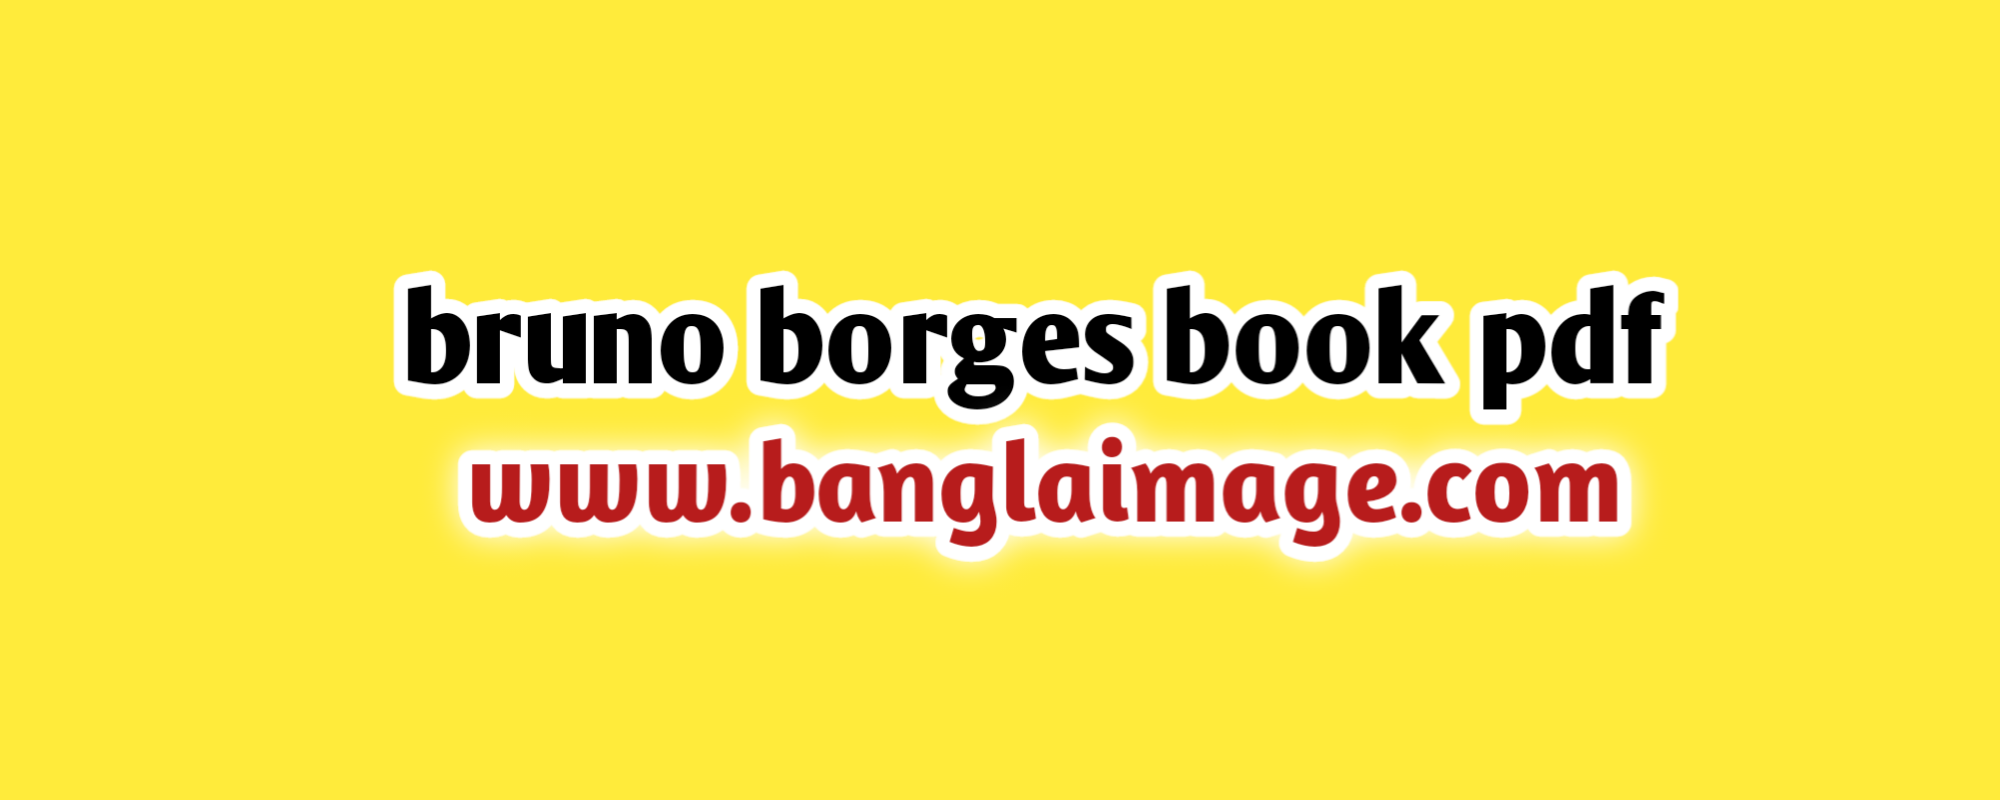 bruno borges book pdf, bruno borges book pdf drive file, bruno borges book pdf now, the bruno borges book pdf drive file